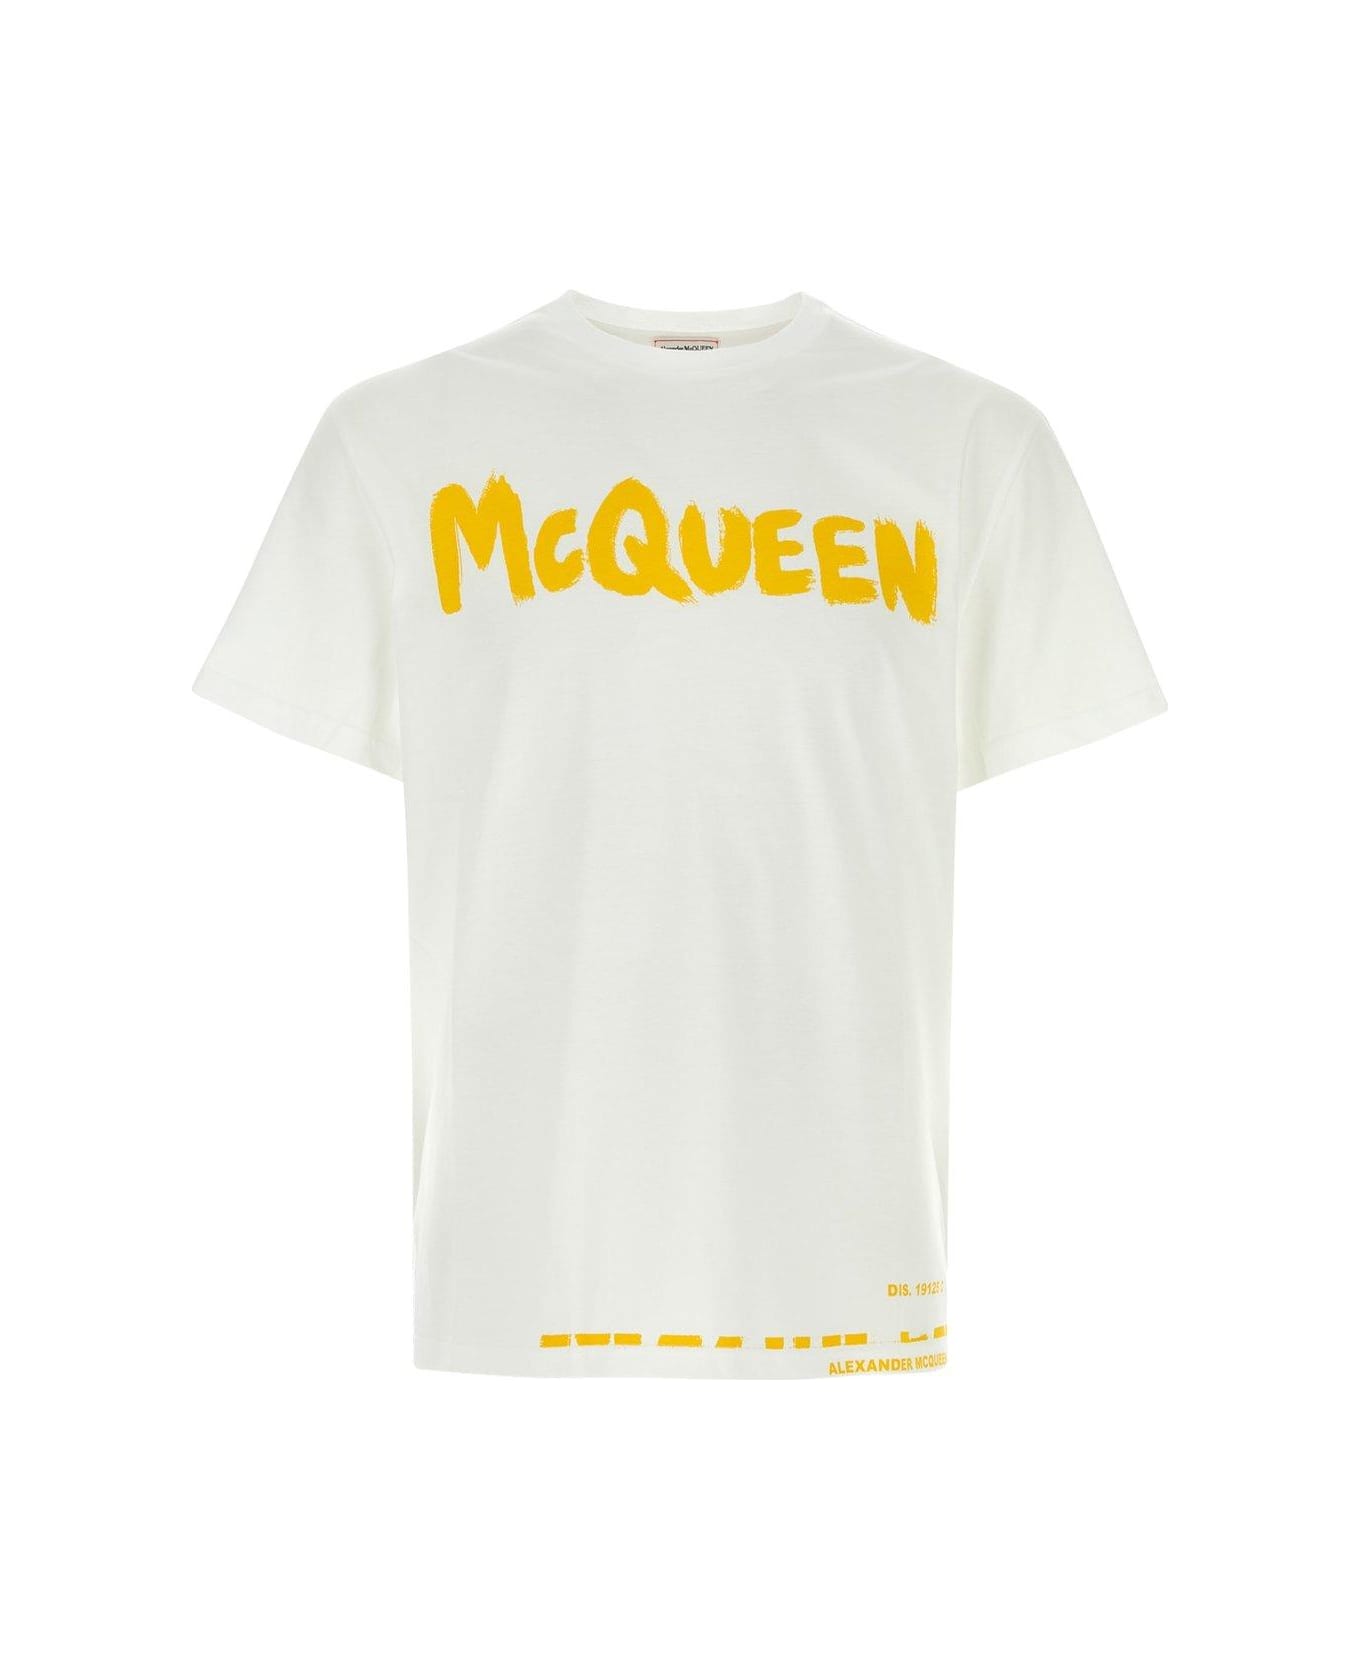 Alexander McQueen Graffiti Printed Crewneck T-shirt - White Yellow